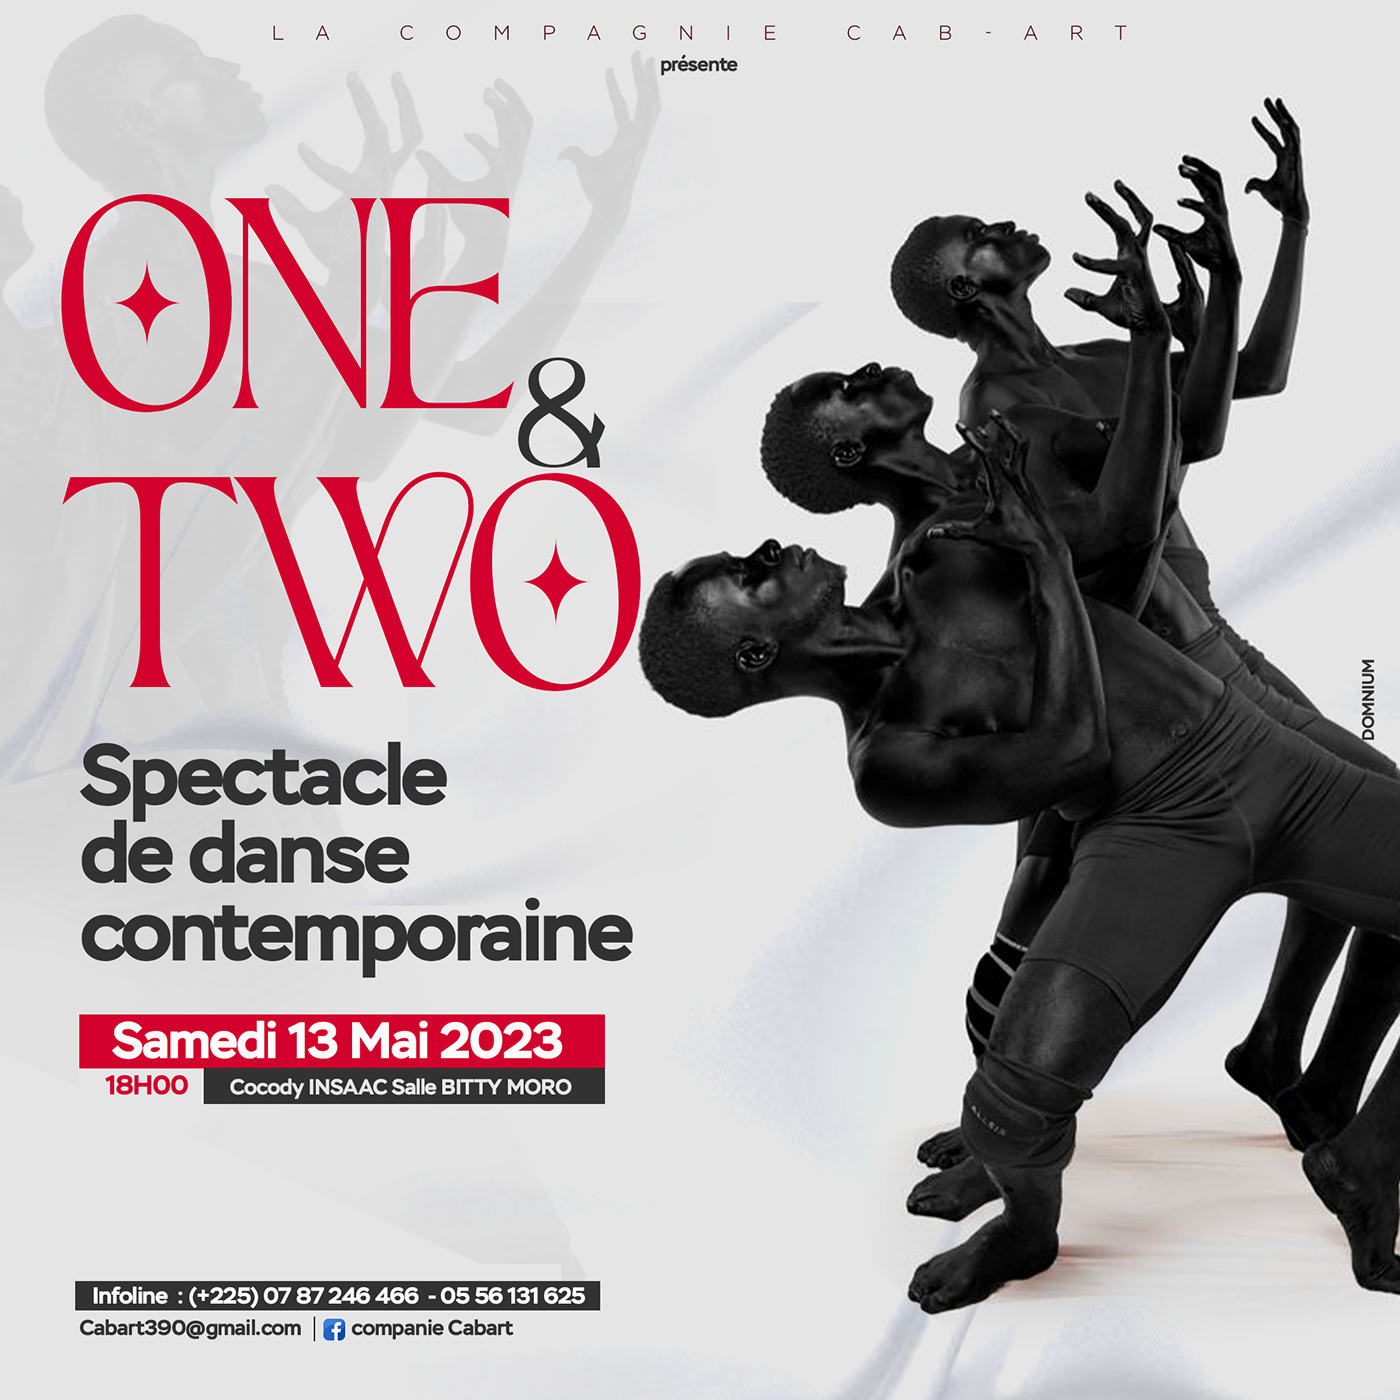 danse Digital Art  Event flyer poster print Social media post